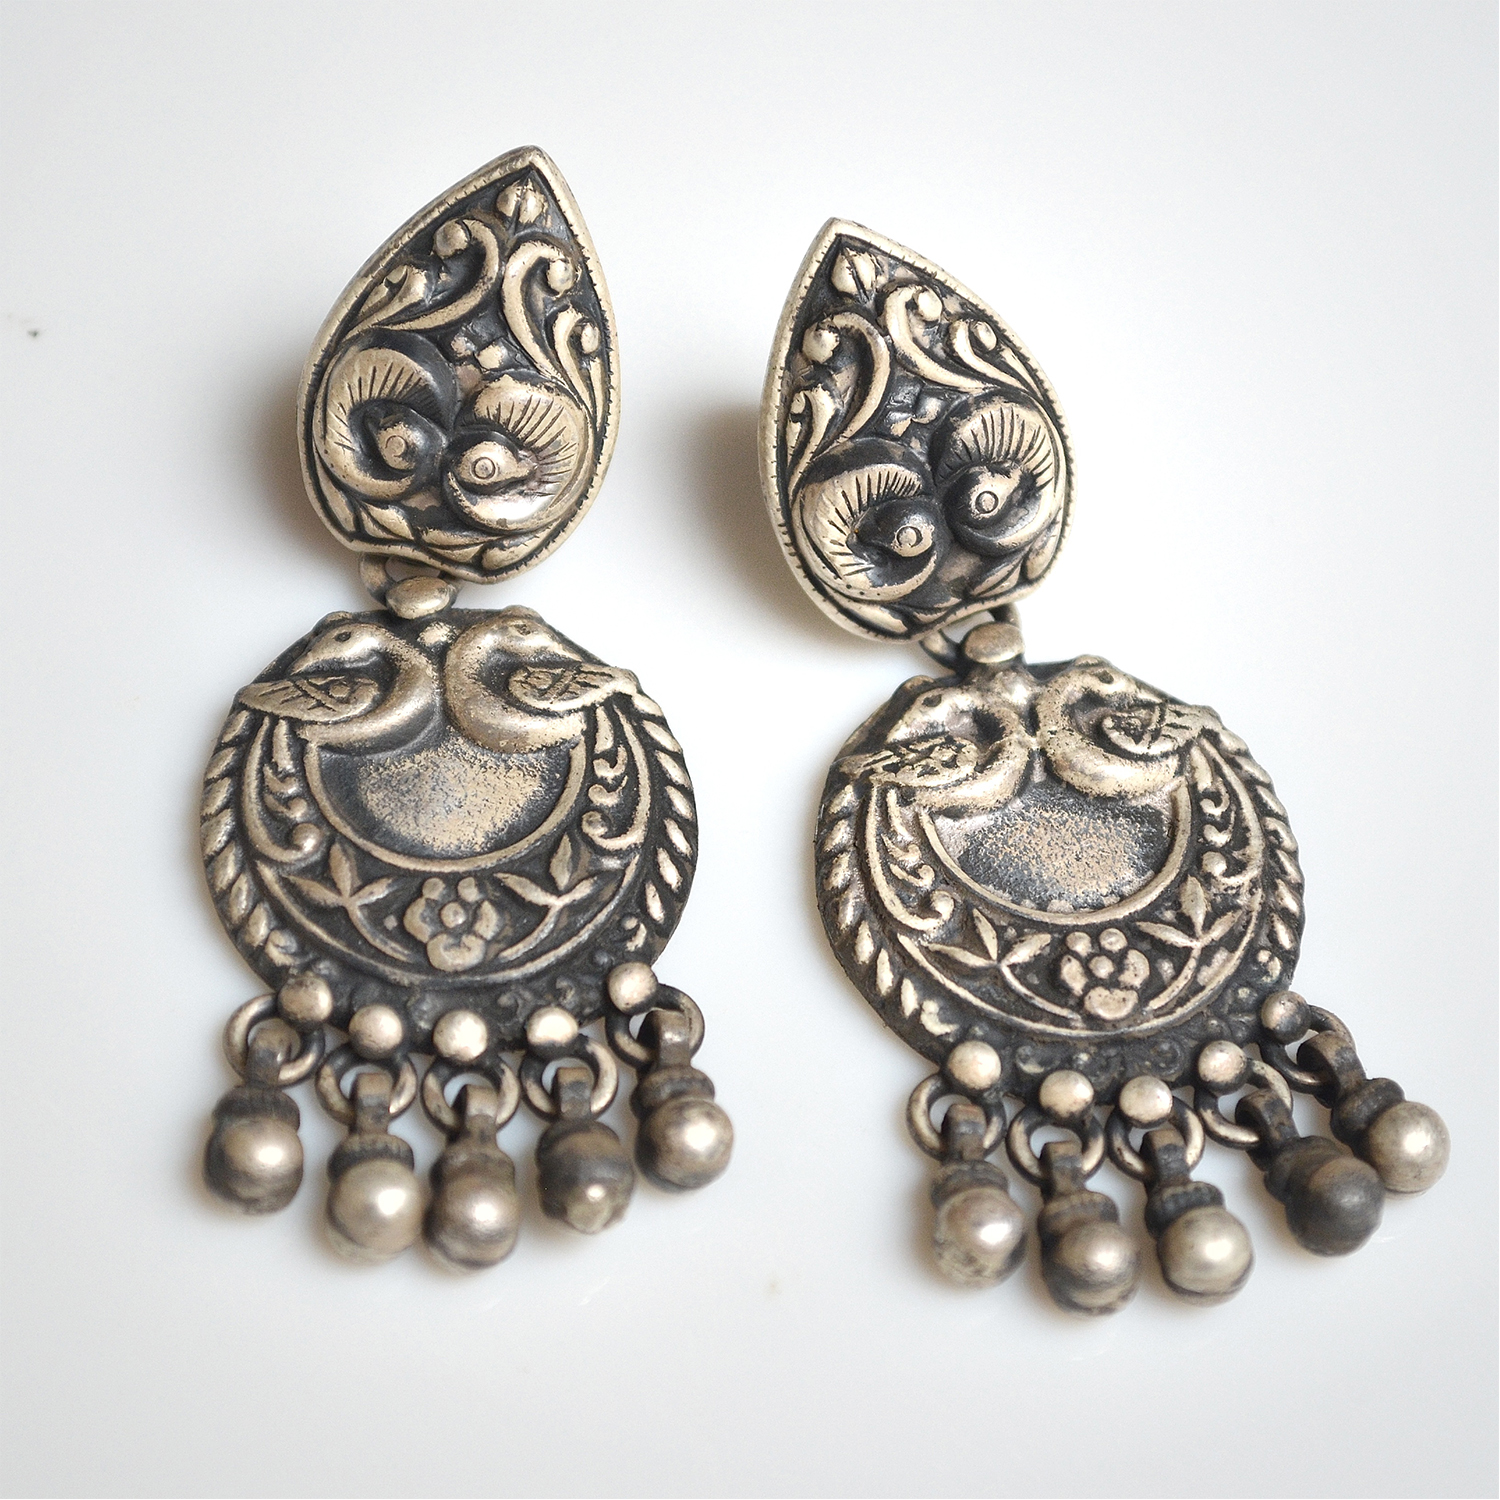 Pearl Leather Earrings, Casual Boho Chic earrings – The Rustic Boho Chic  Jewelry